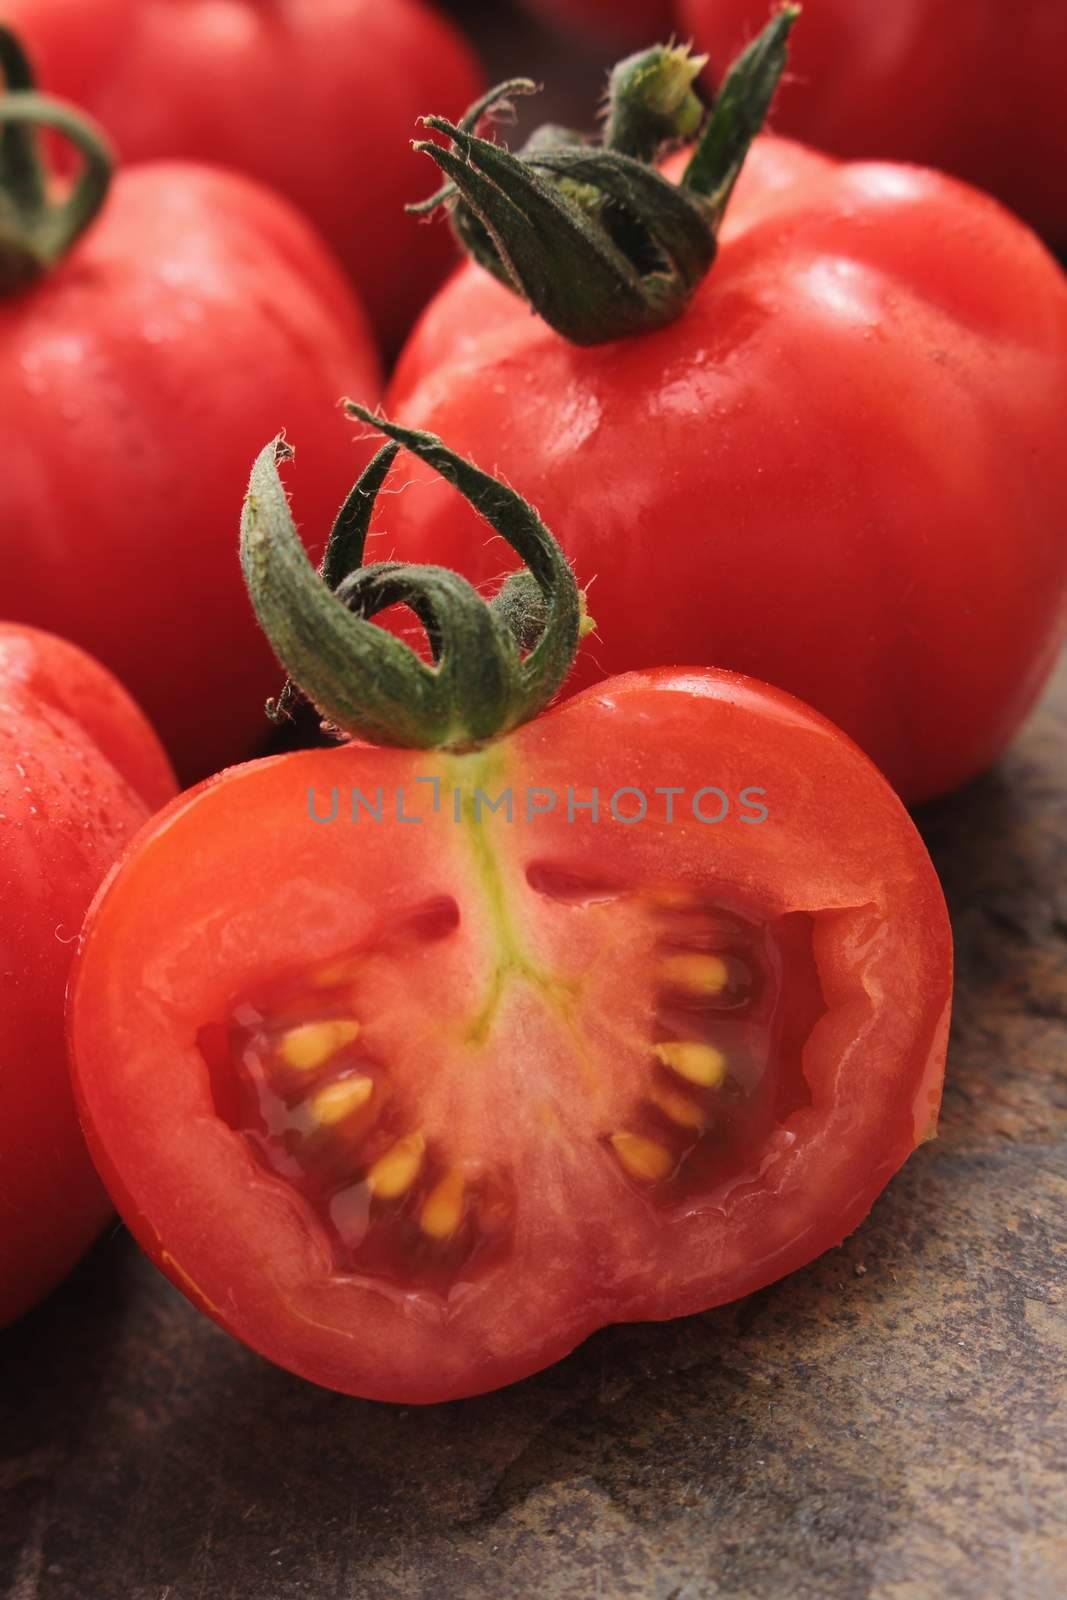 heritage tomatoes